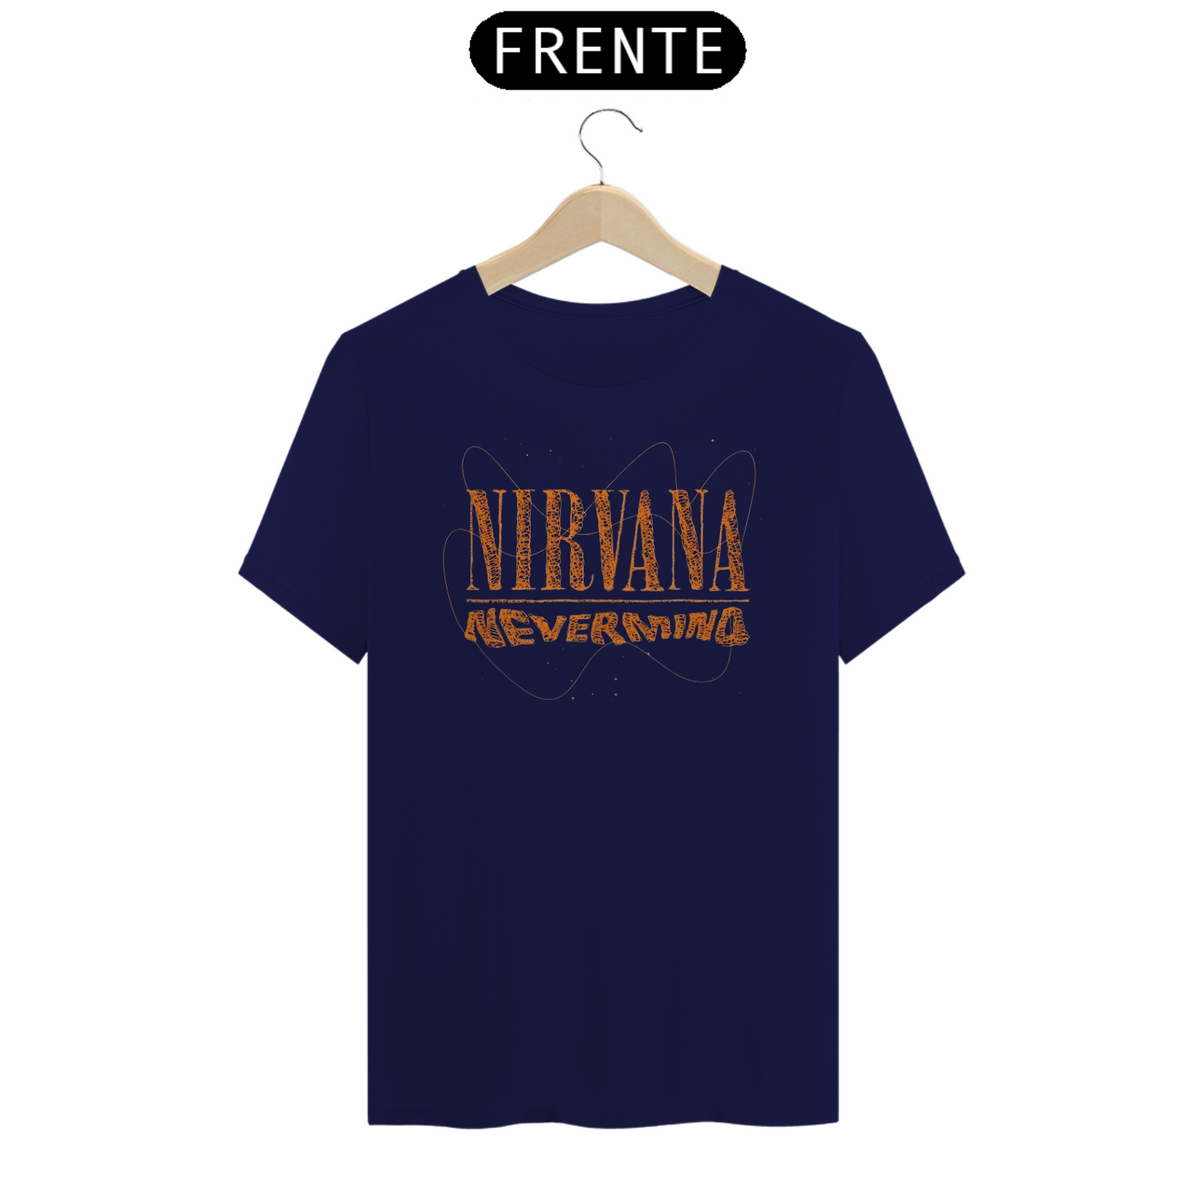 Nome do produto: Nirvana